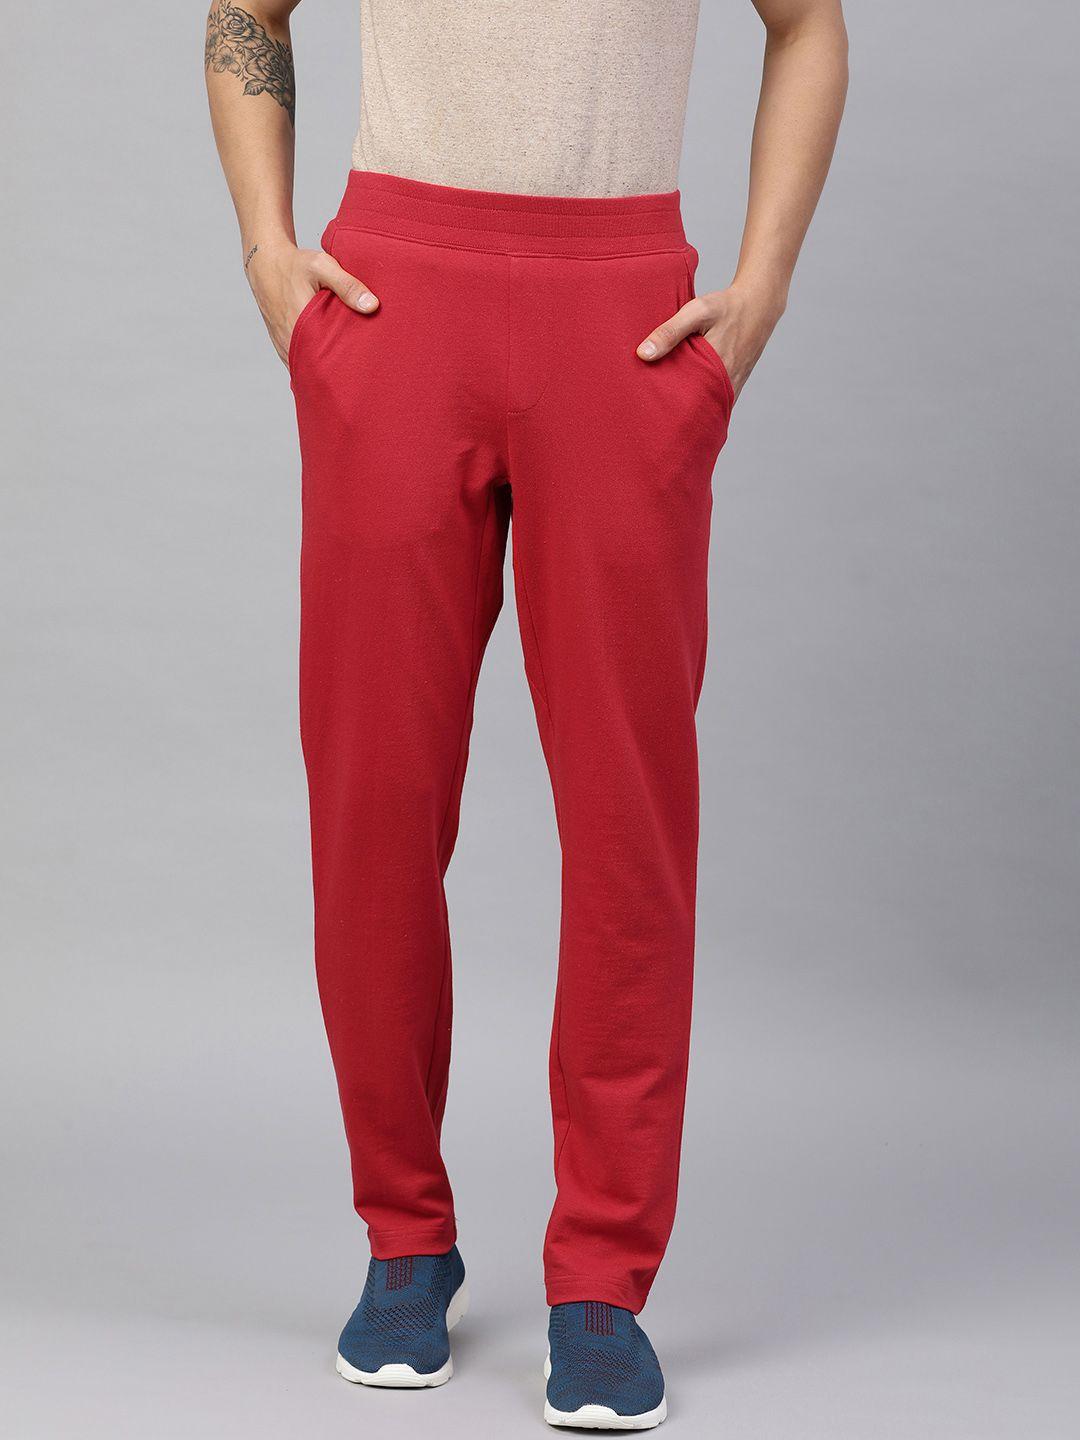 huetrap-men-red-solid-track-pants